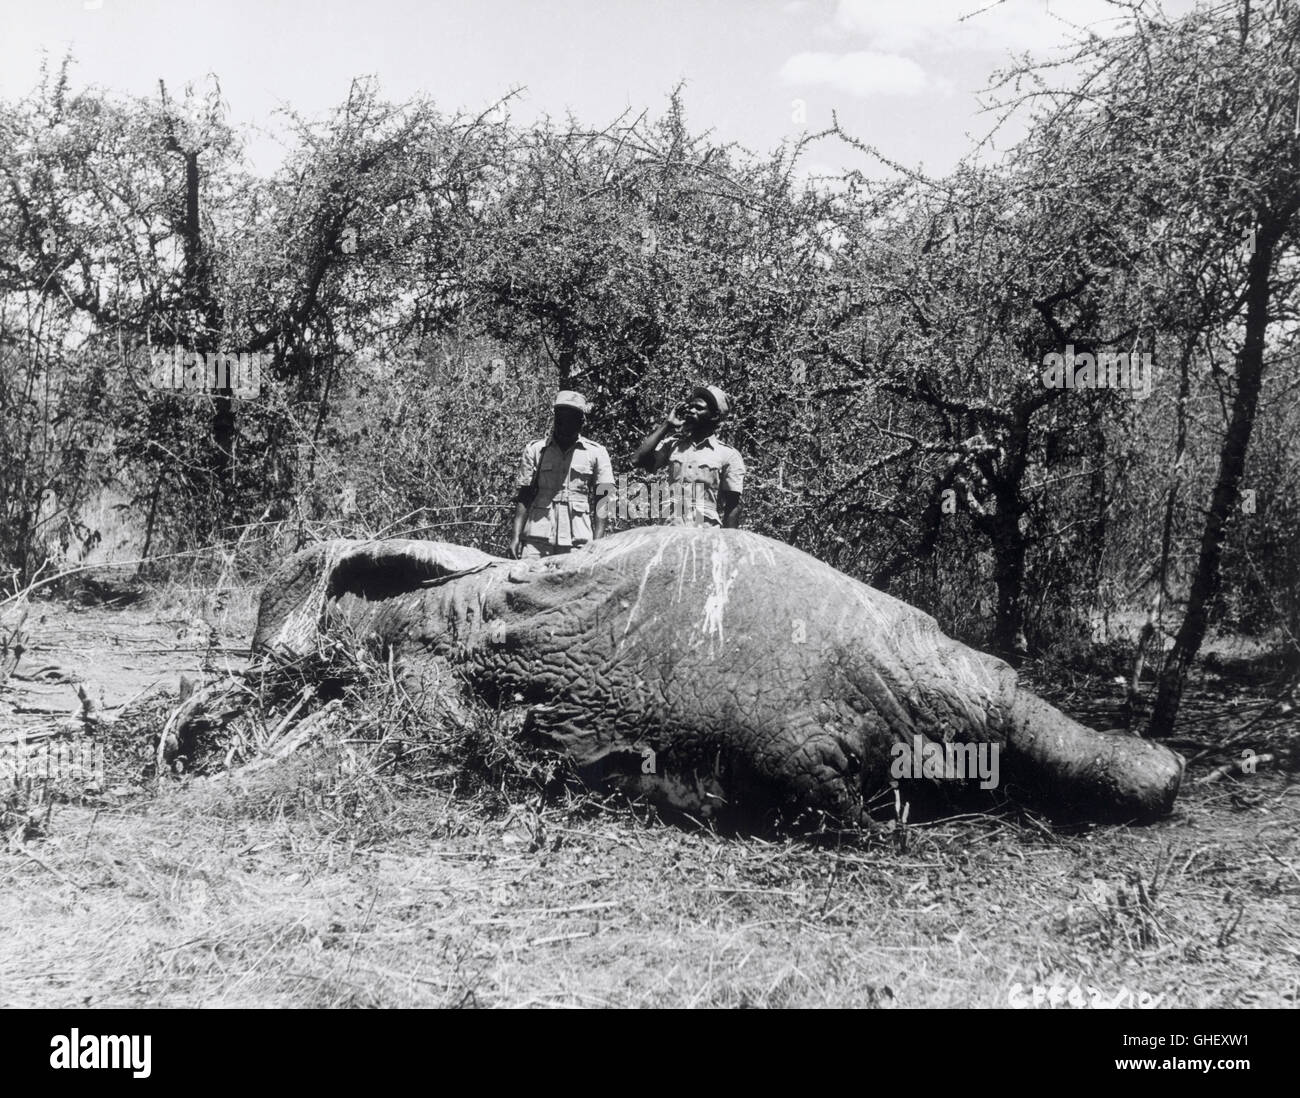 TOTO AND THE POACHERS UK 1958 Brian Salt Dead elephant in Africa. Regie: Brian Salt Stock Photo